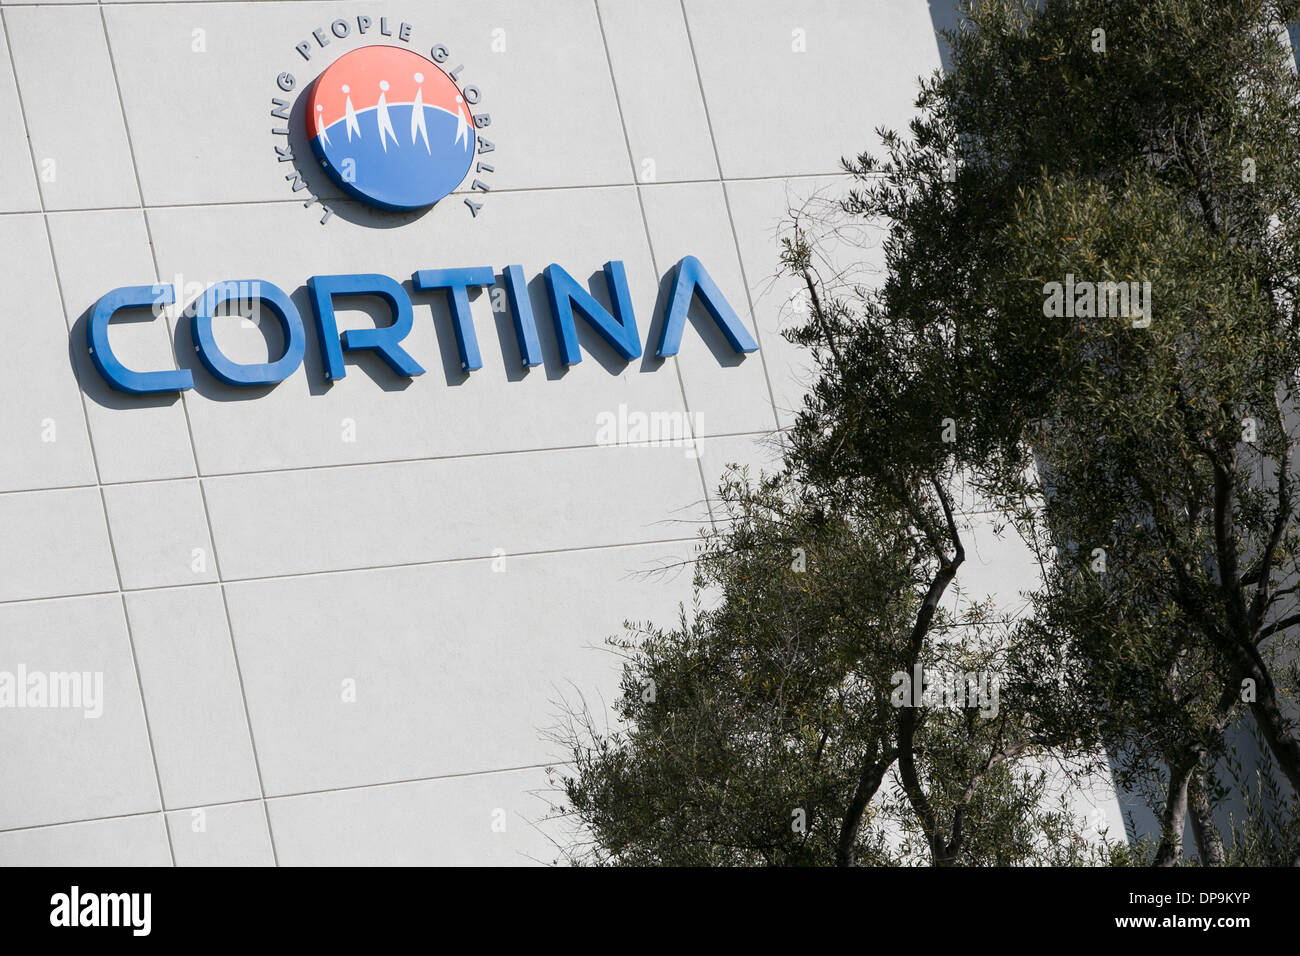 The headquarters of Cortina in Sunnyvale, California. Stock Photo